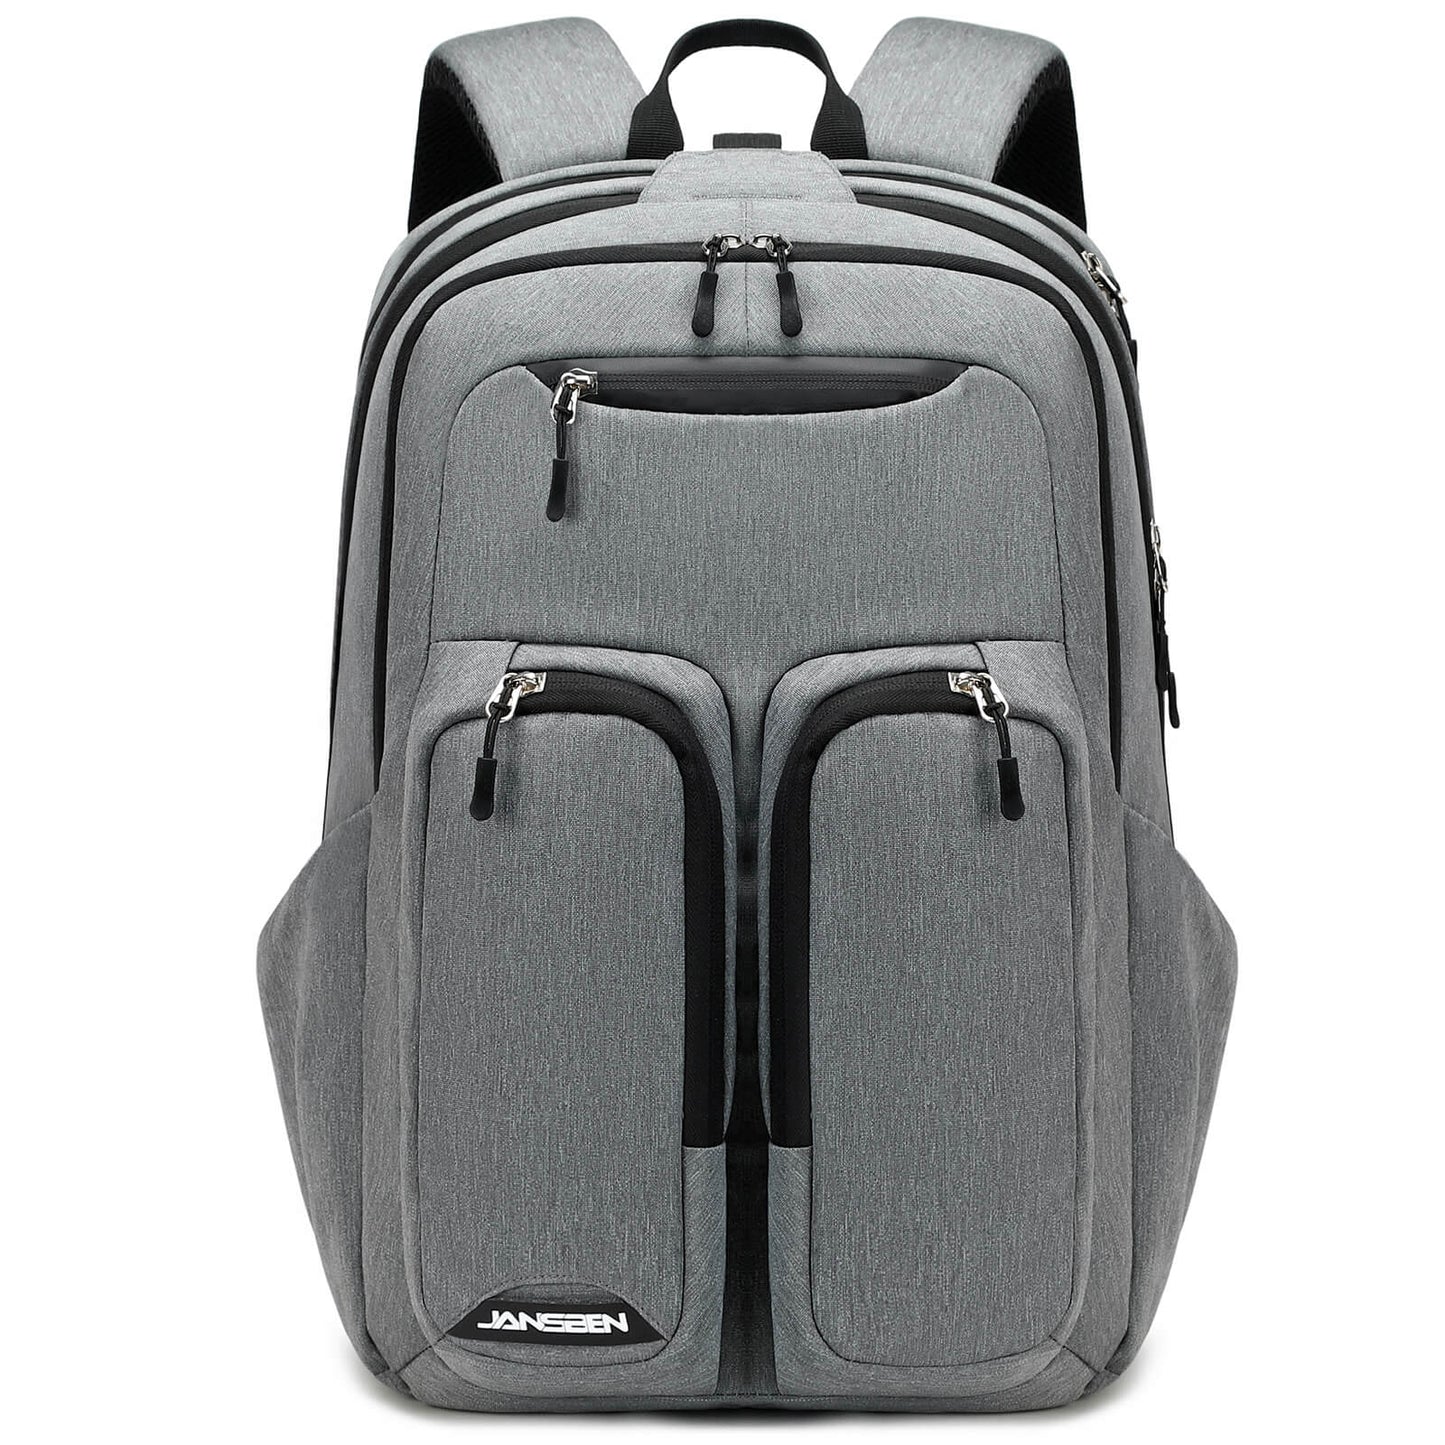 Smart-Laptop-Backpack-jansben-E042-Gray-front